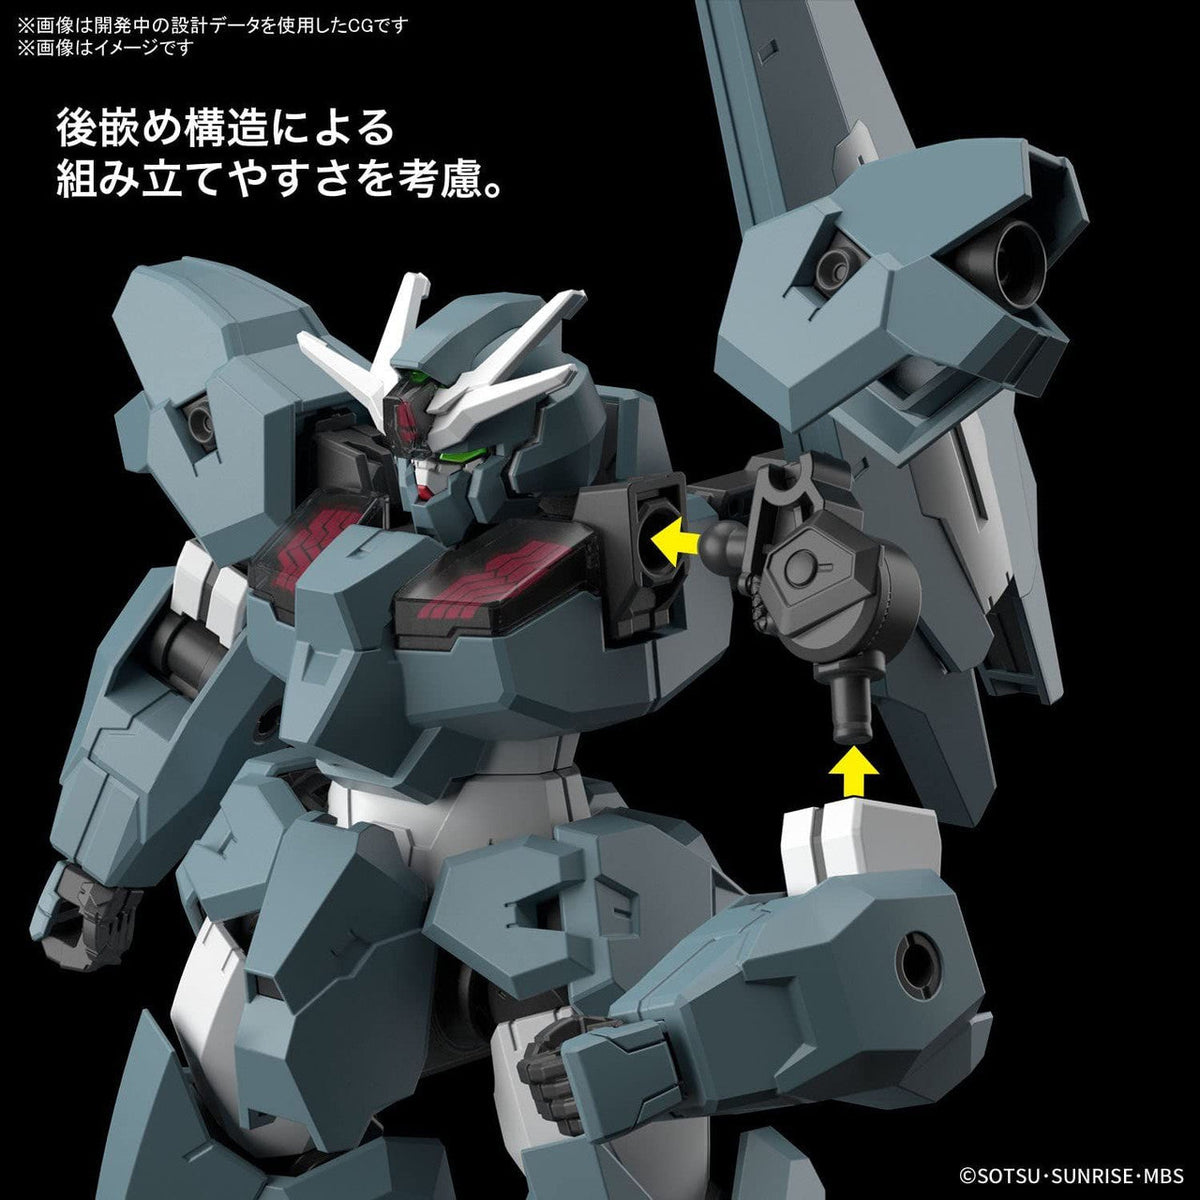 HG 1/144 Gundam &quot;Lfrith UR&quot;-Bandai-Ace Cards &amp; Collectibles